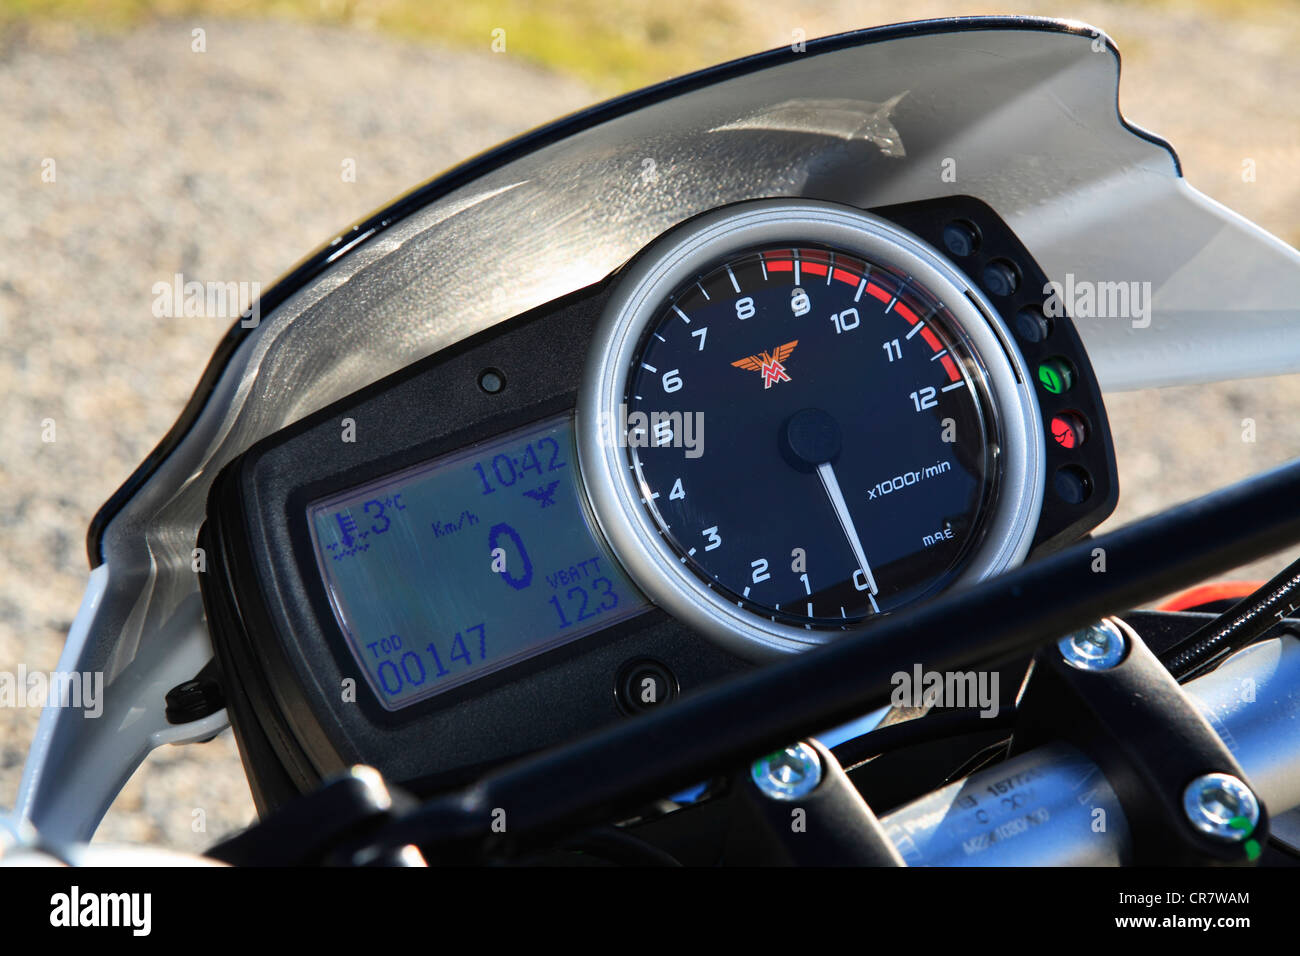 Moto Morini Scrambler, Motorrad, dashboard Stockfotografie - Alamy